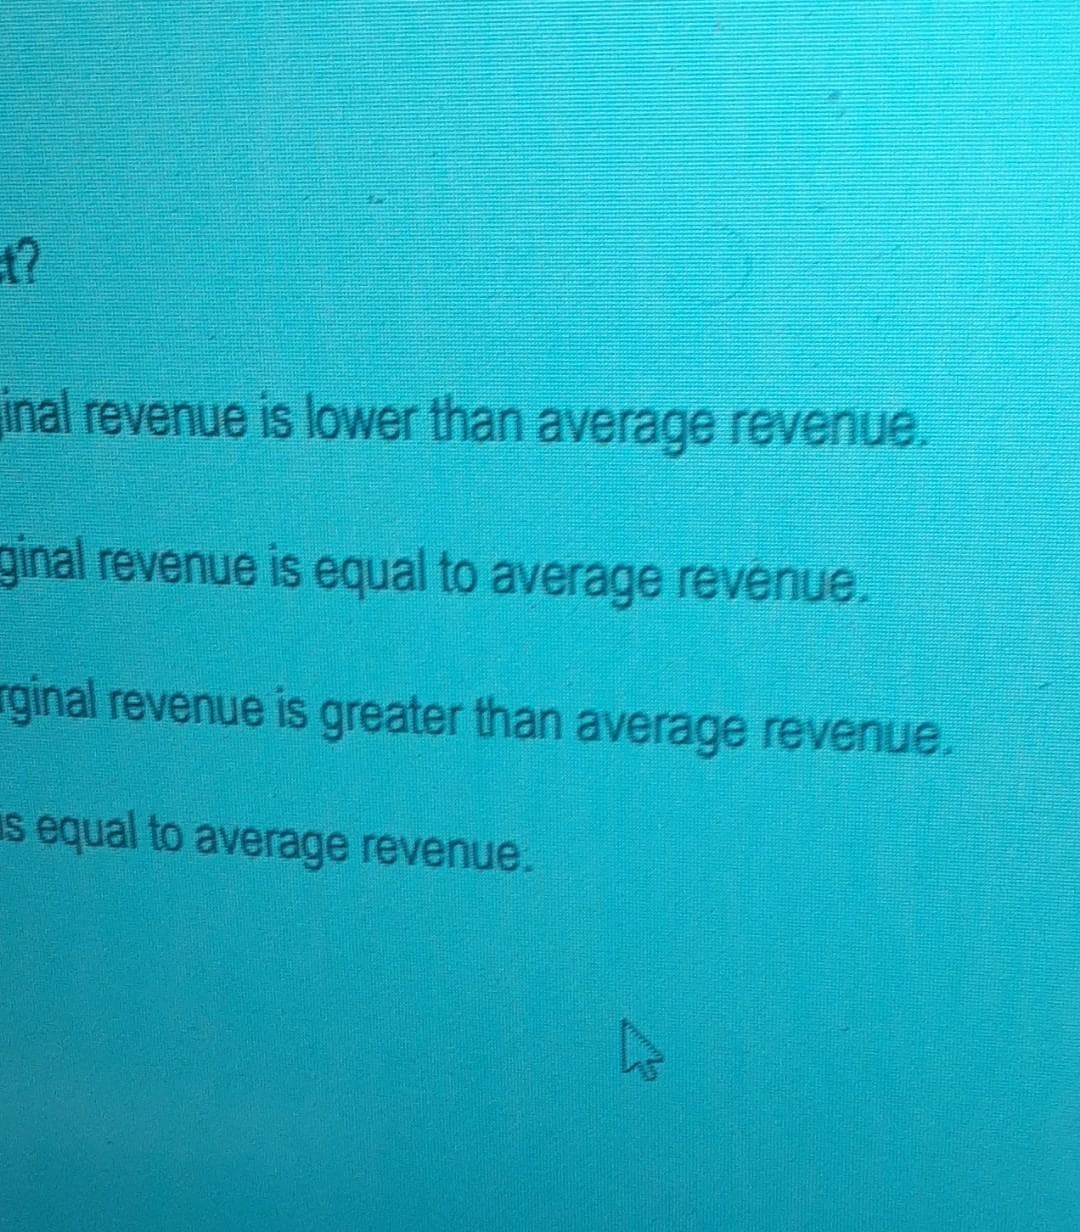 t?
inal revenue is lower than average revenue.
ginal revenue is equal to average revenue.
rginal revenue is greater than average revenue.
is equal to average revenue.